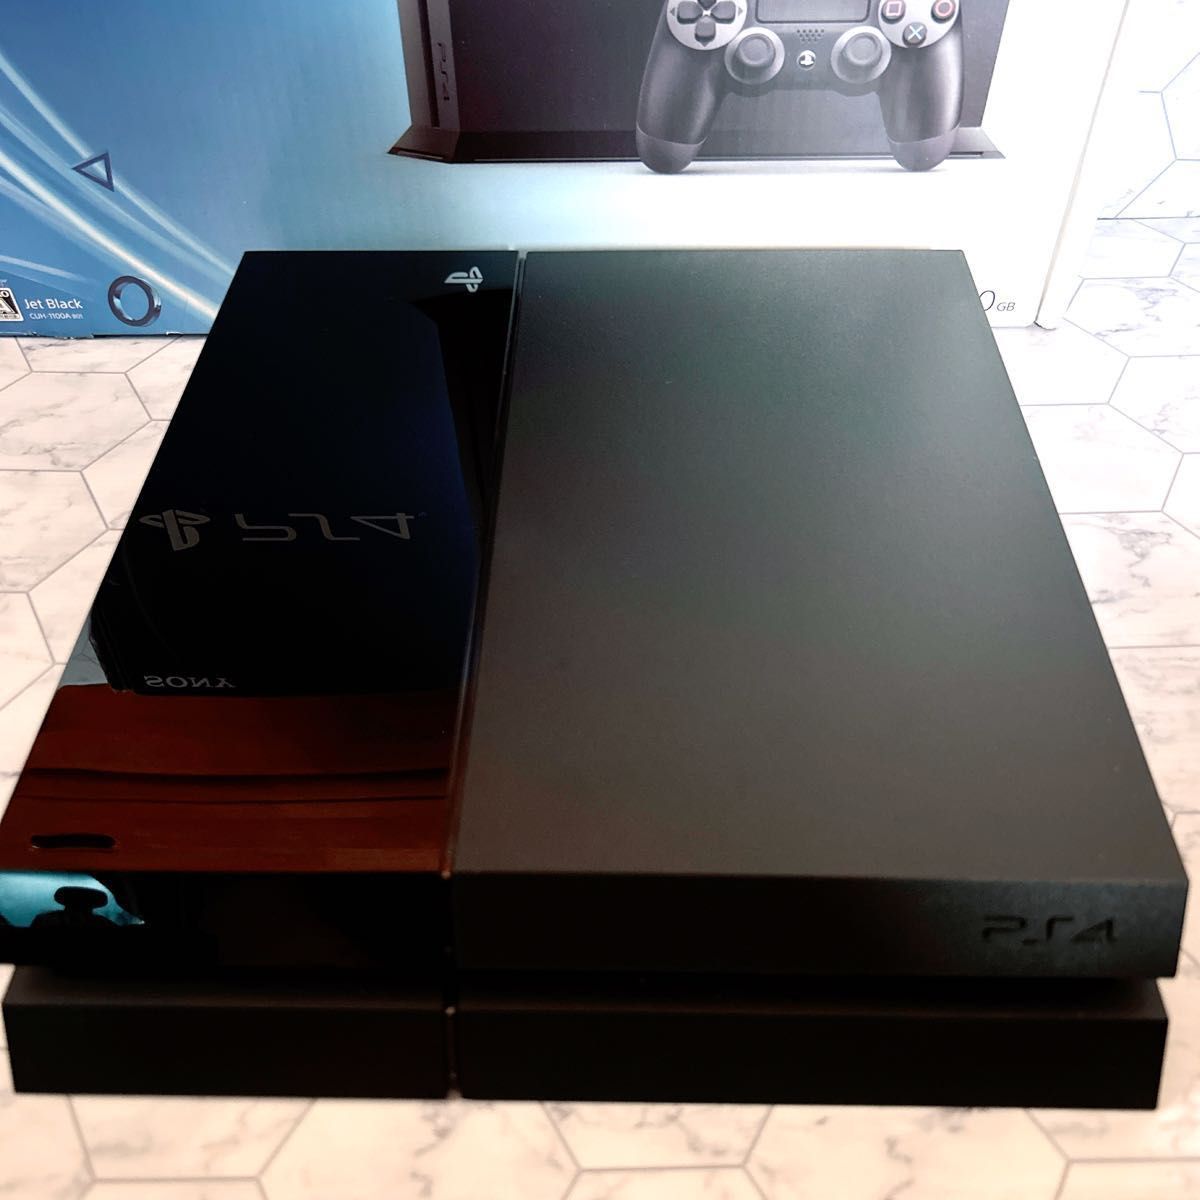 online shop PlayStation®4 ジェット・ブラック 500GB CUH-1100A